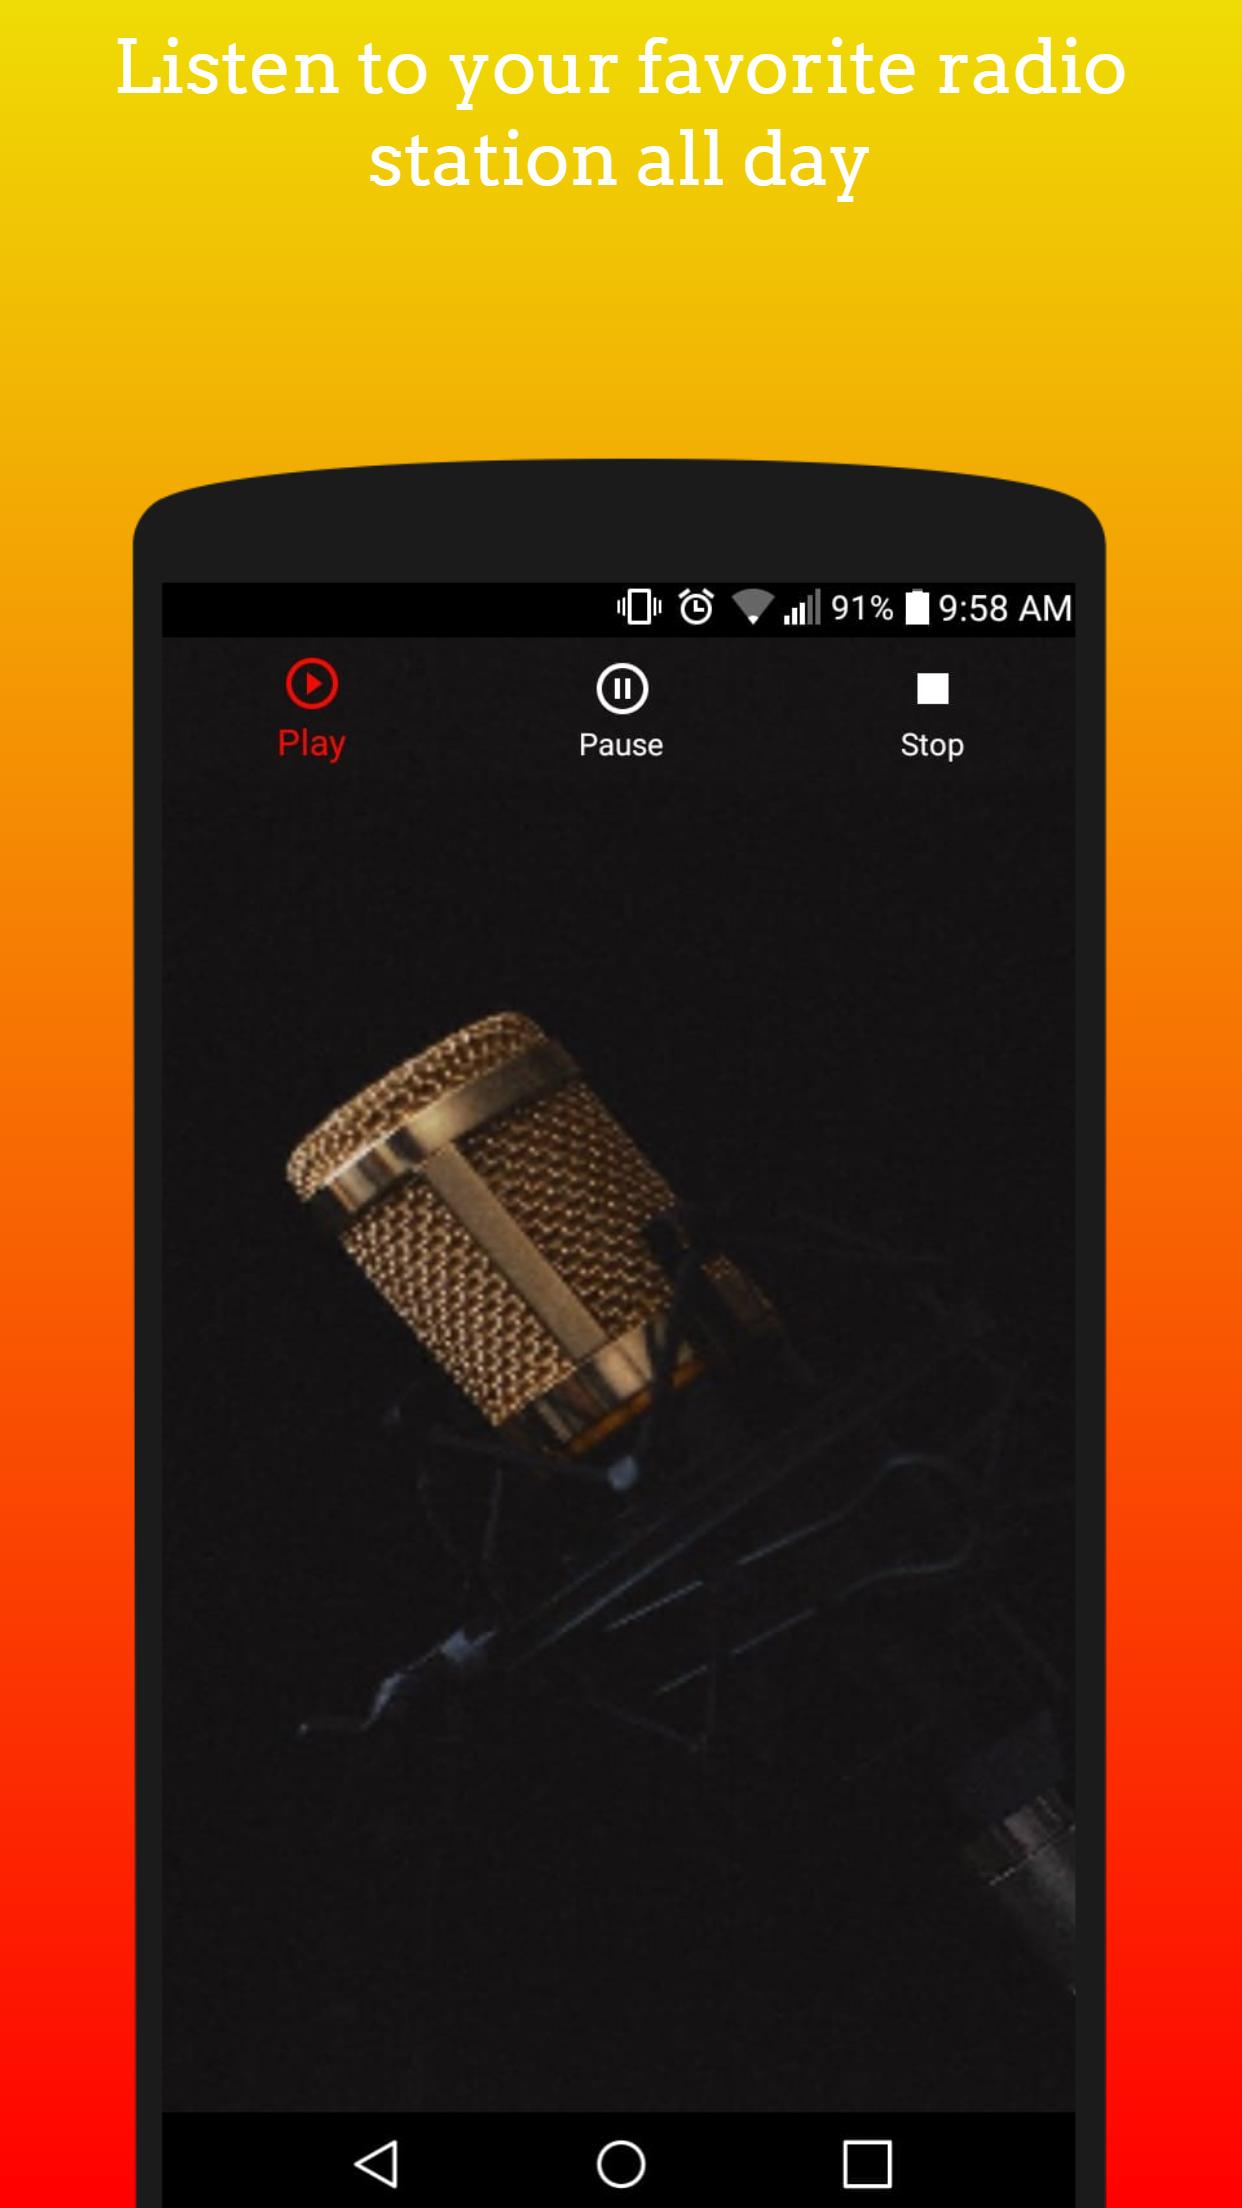 Radio Turbo 98.3 FM en vivo Emisora dominicana APK for Android Download